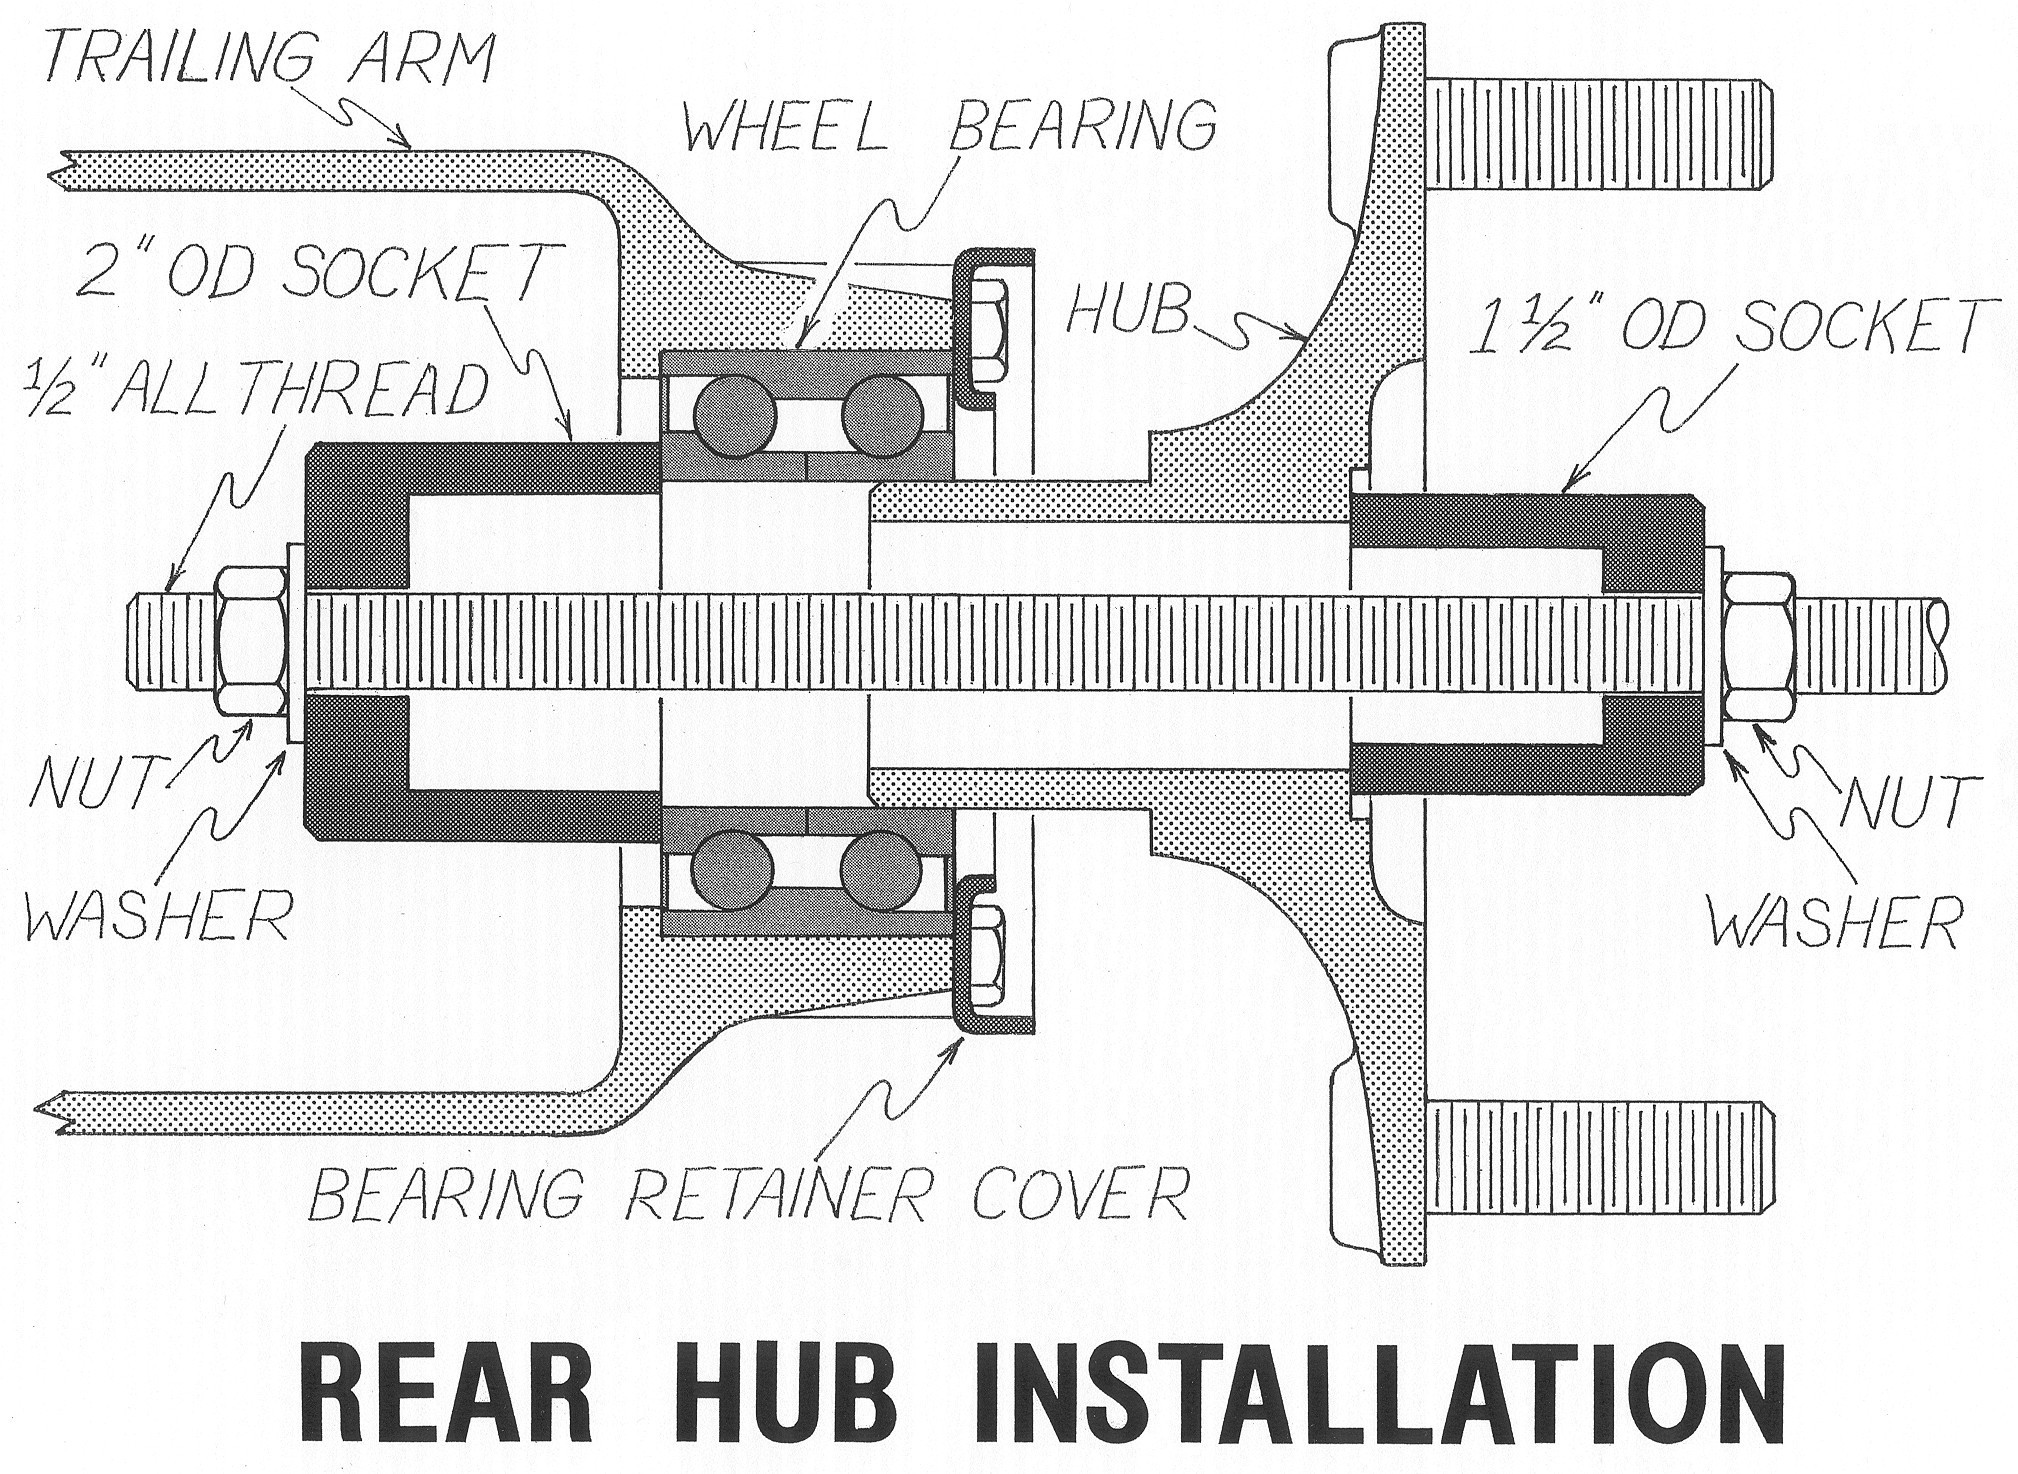 Rear Brake assembly Diagram Drum Brake assembly Diagram Pelican Technical Article 914 Five Bolt